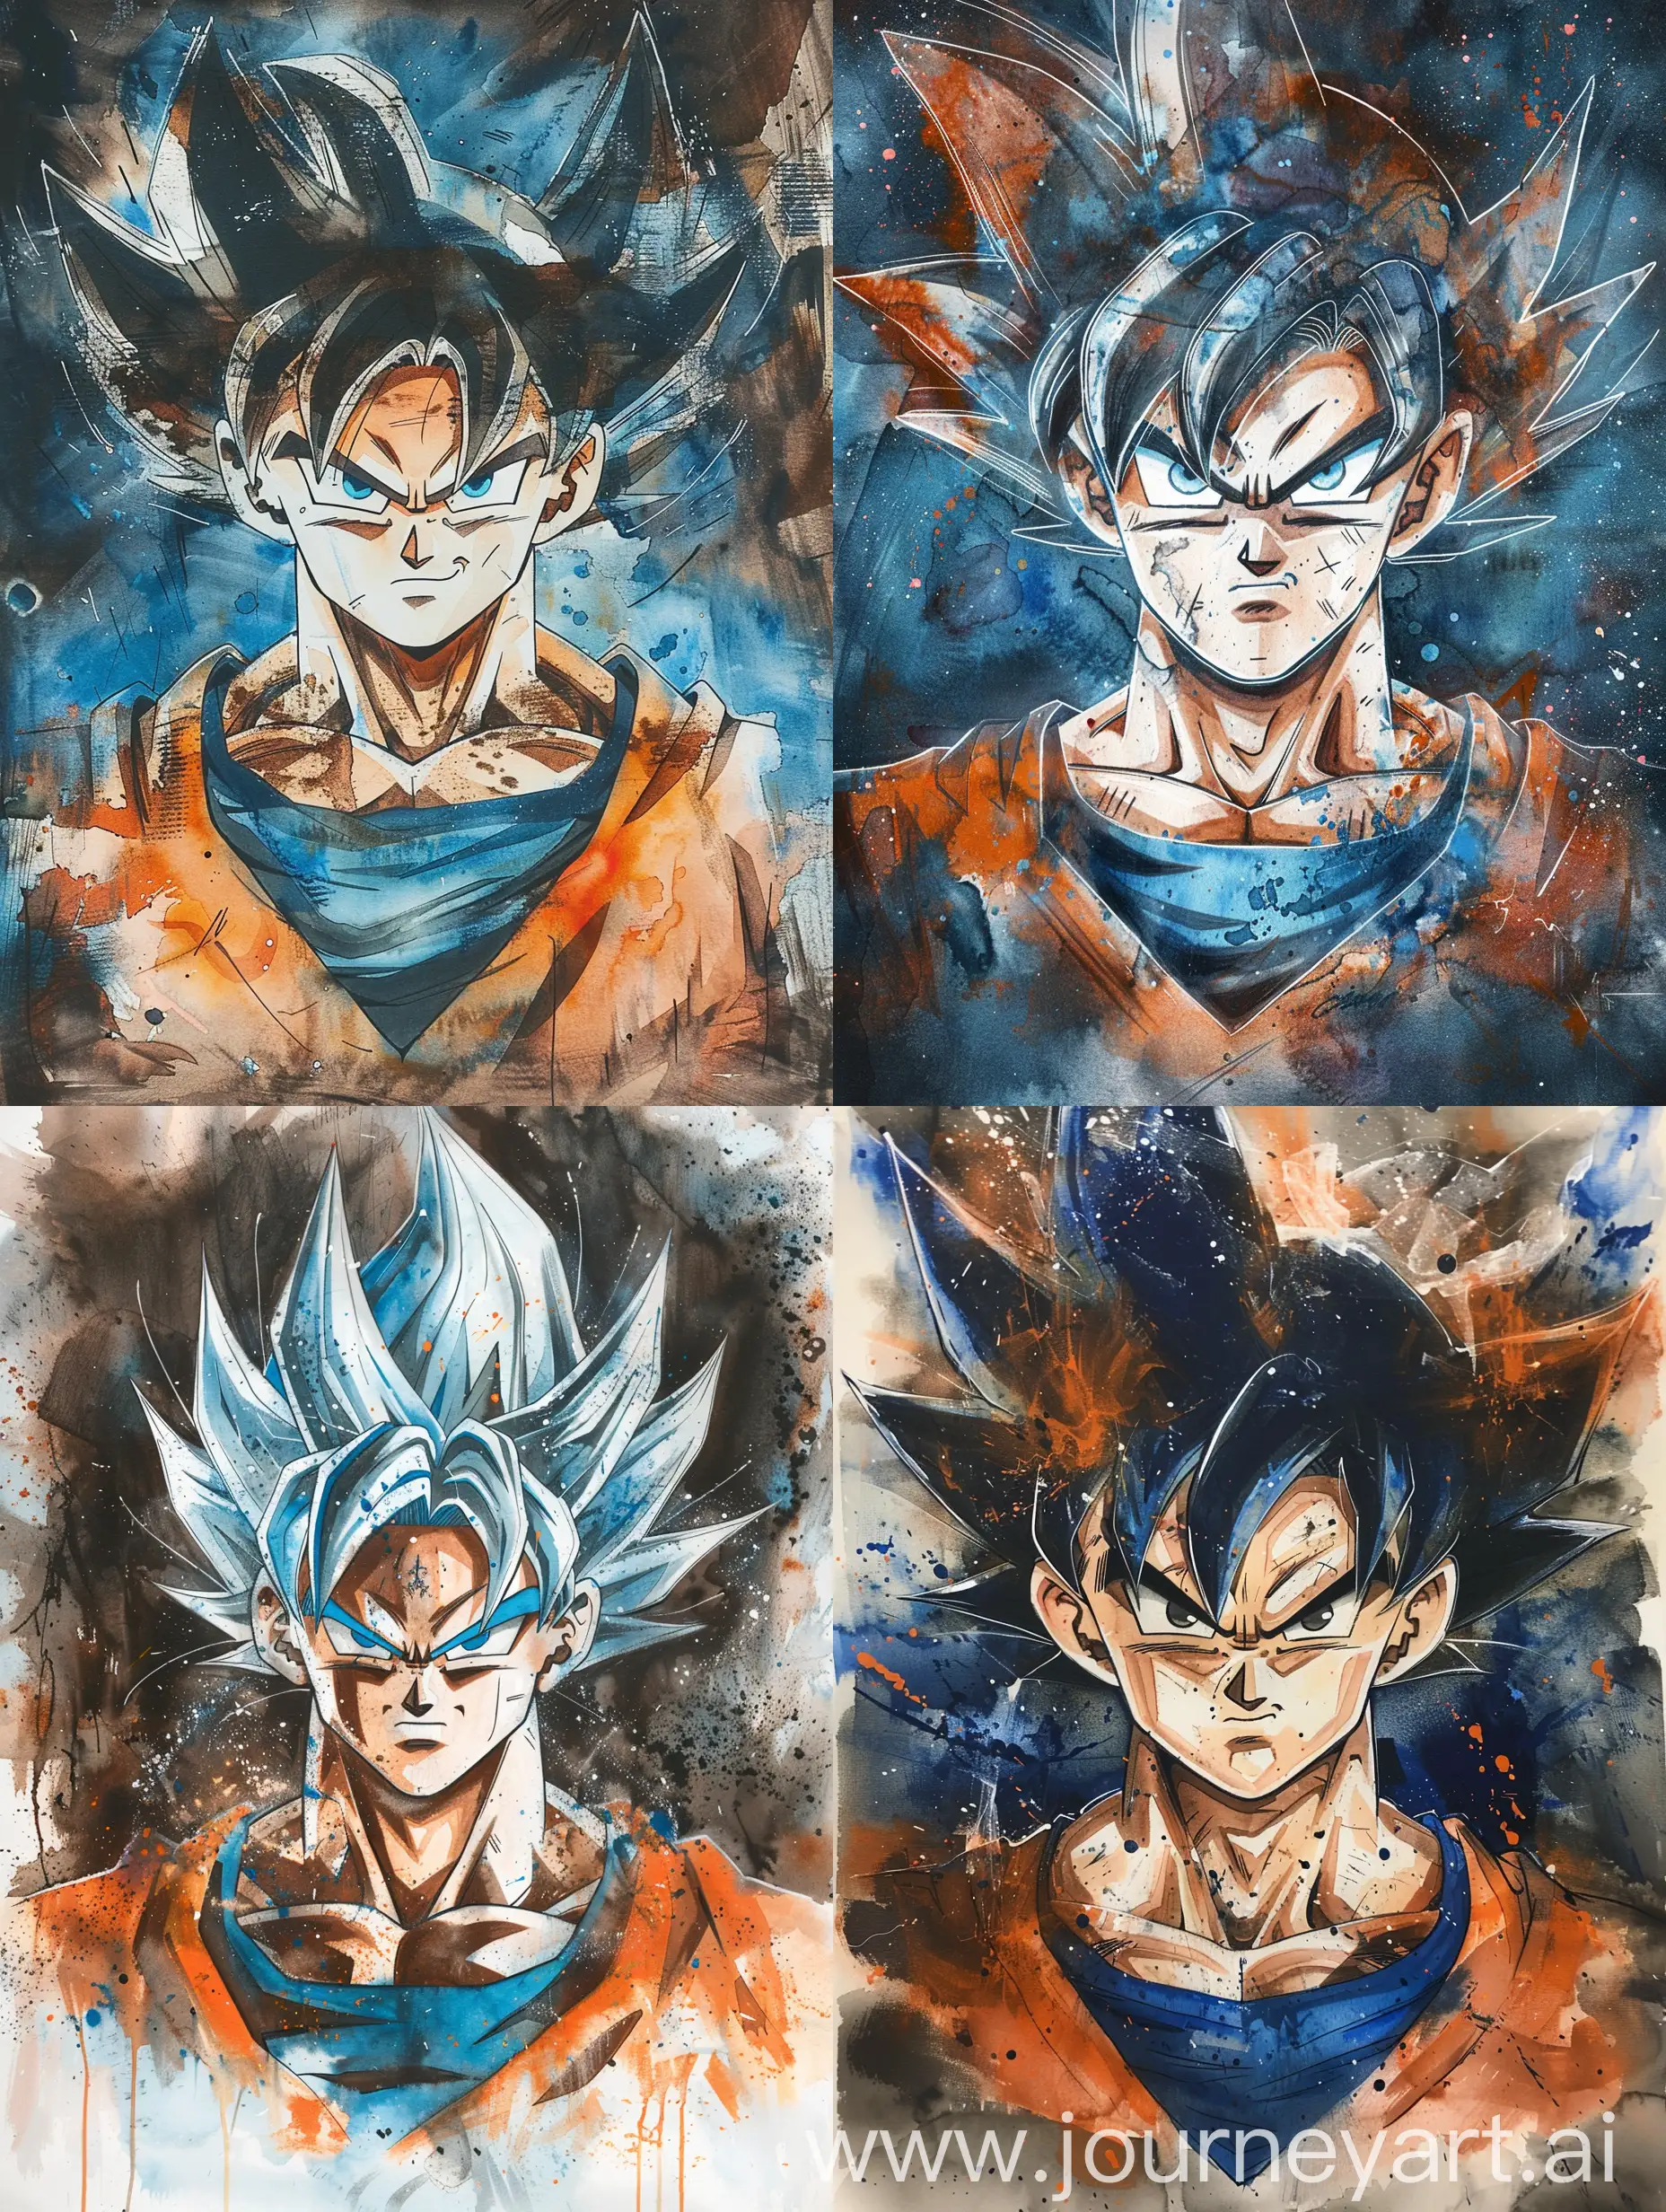 Mystical-Watercolor-Portrait-of-Goku-Legendary-Hero-in-Vibrant-Orange-and-Blue